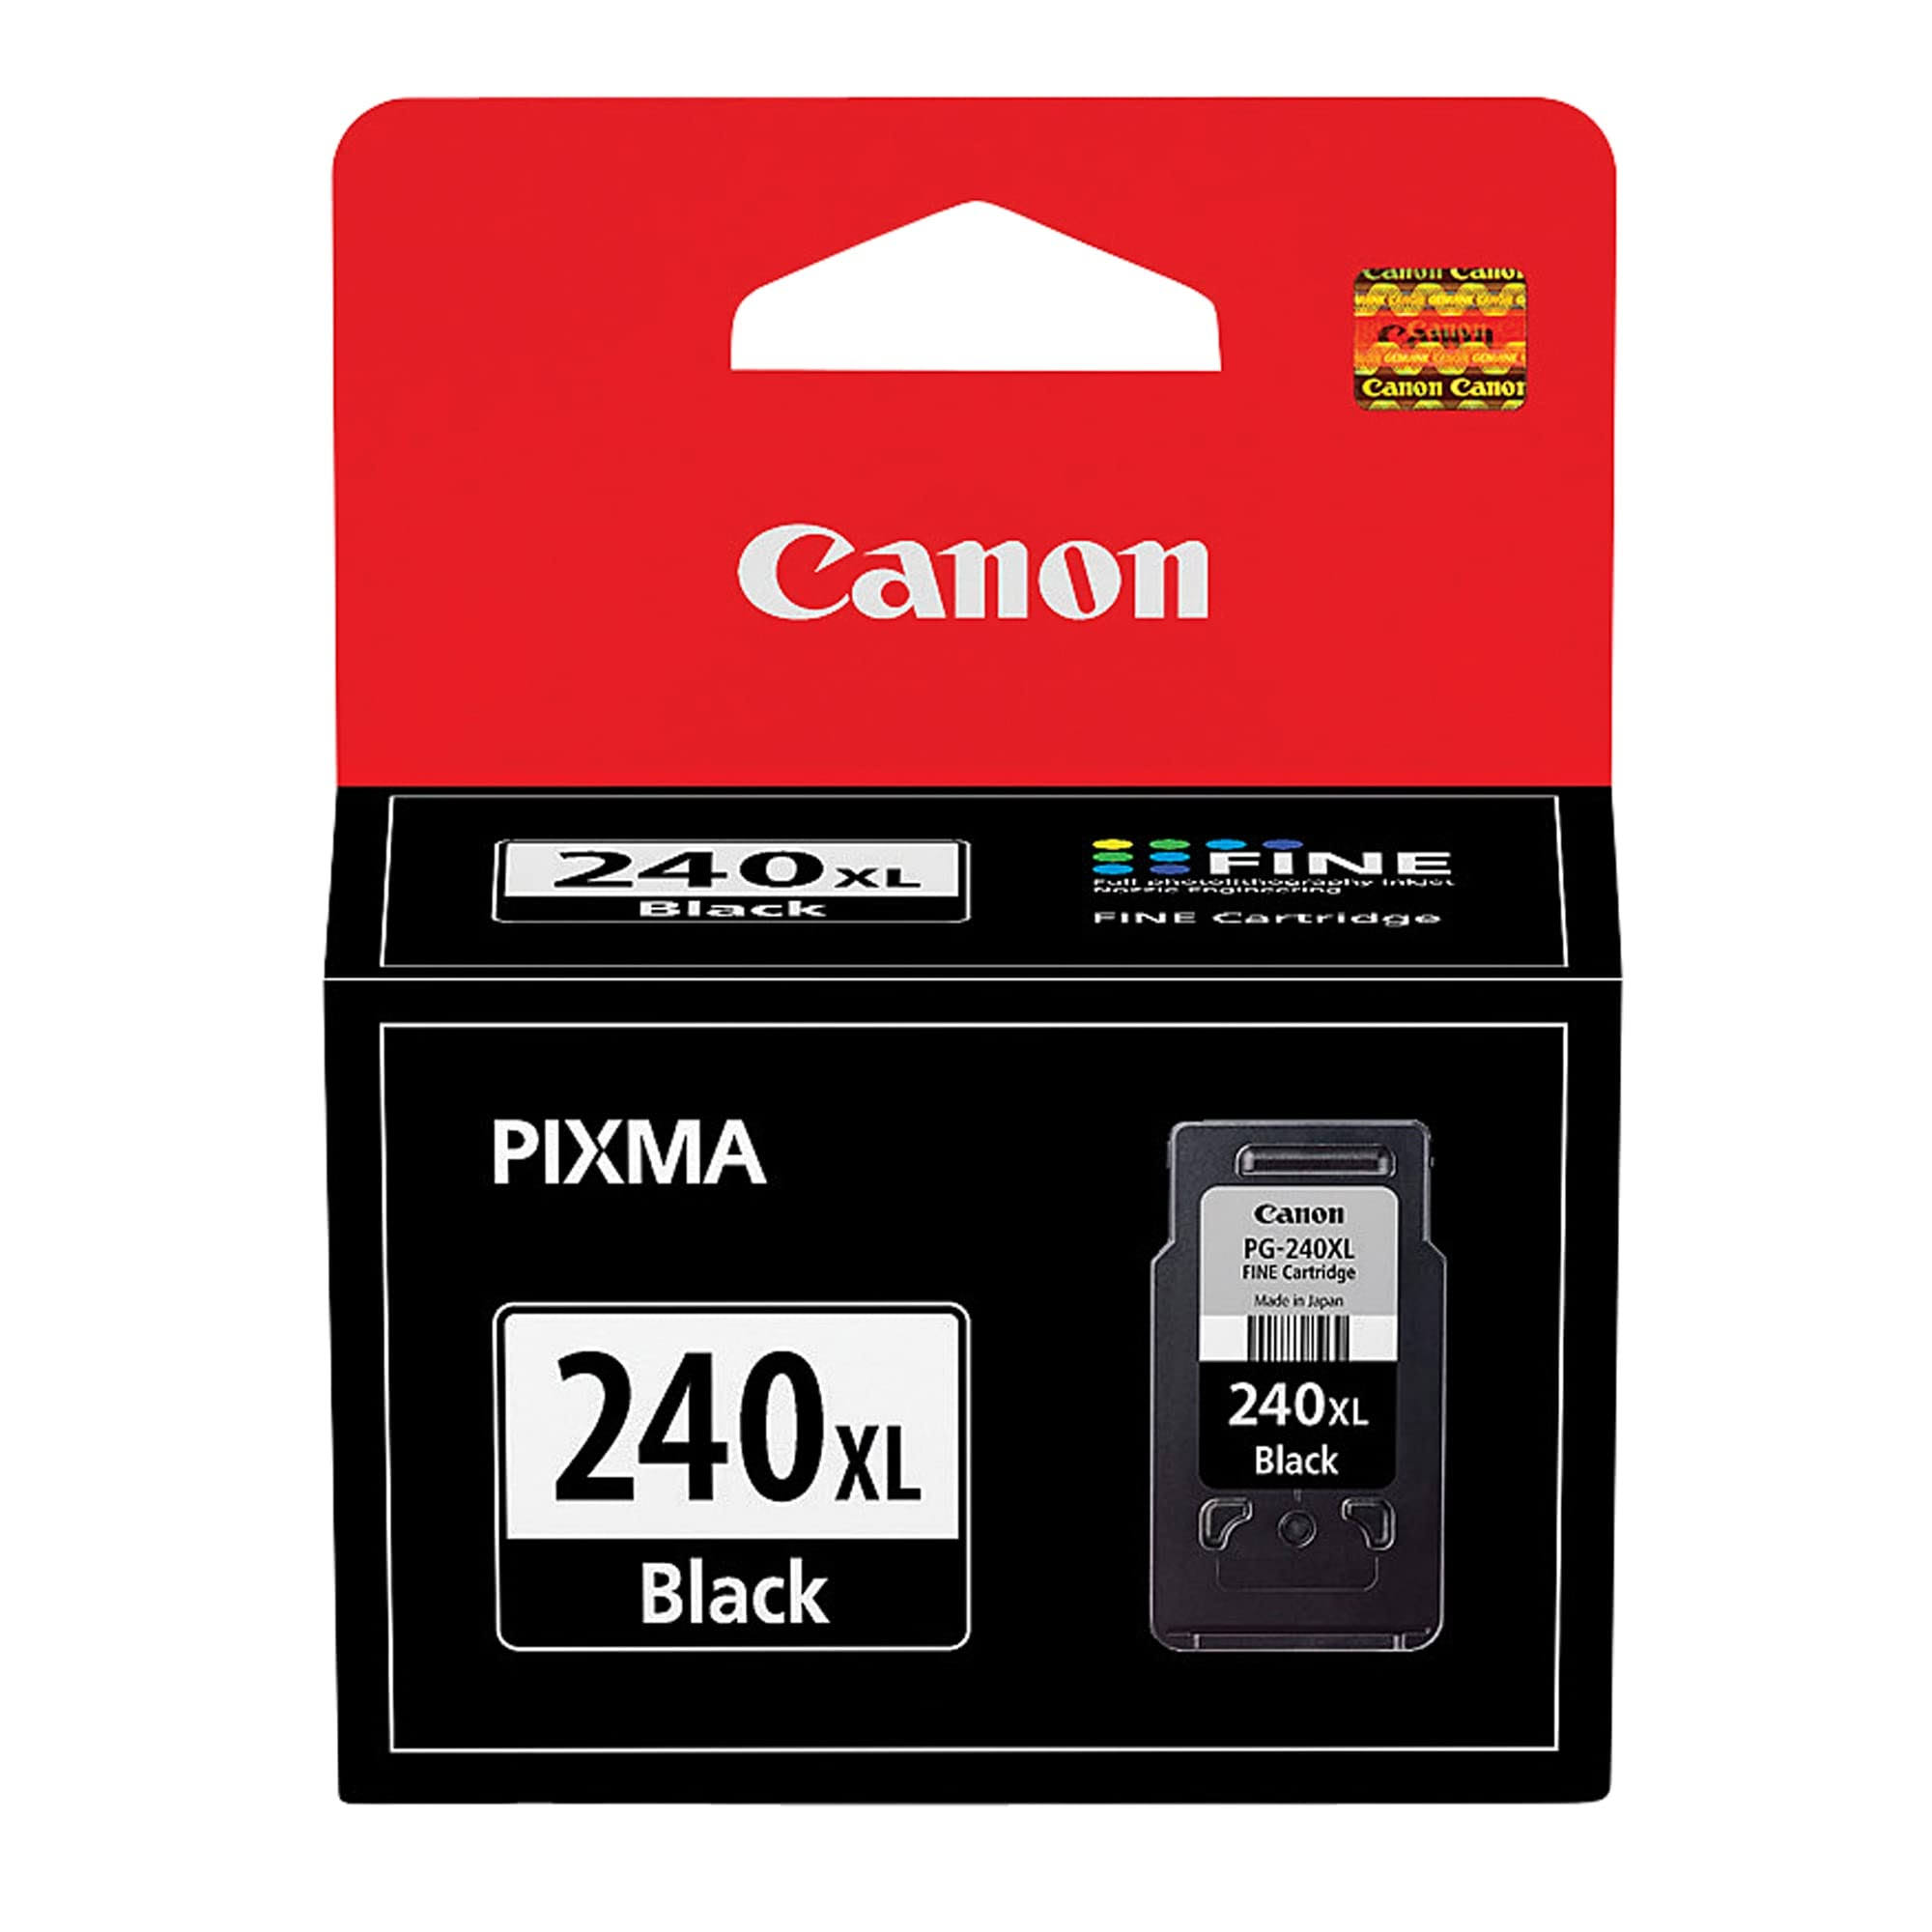 Canon 240xl Fine Cartridge Ink - Black